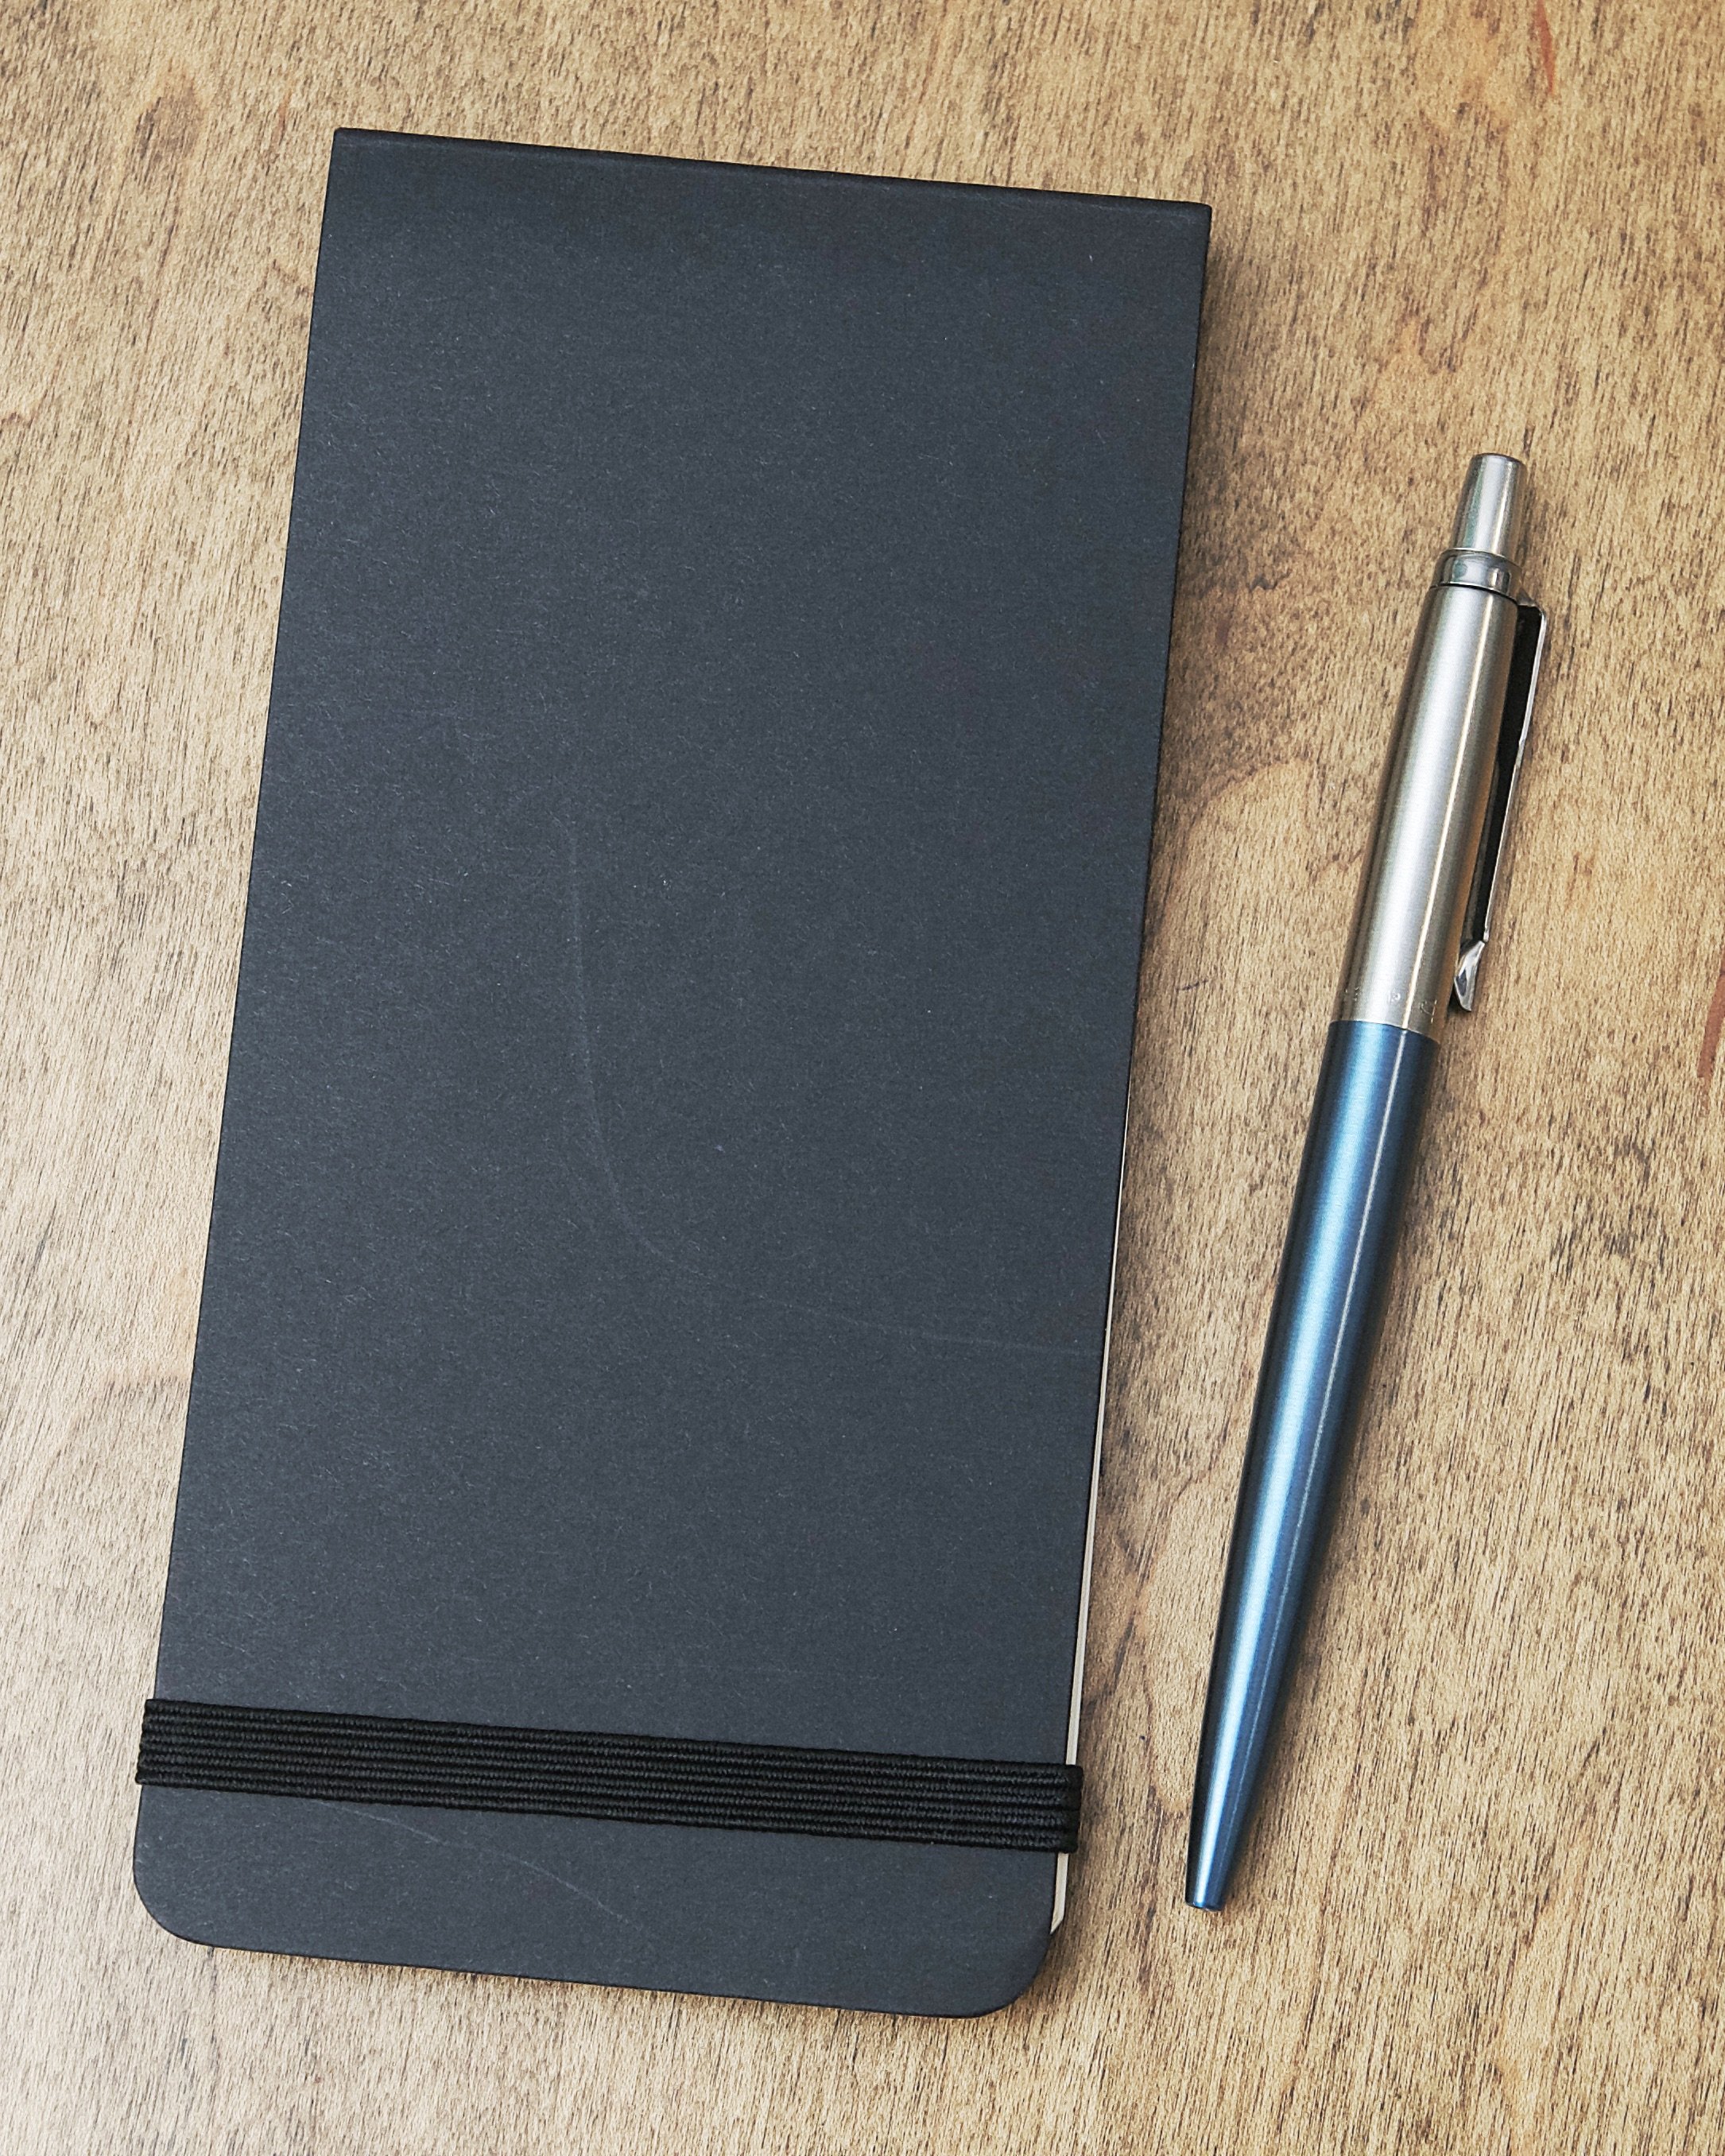 Iconic Retro Pen Set Review - Joyful Art Journaling